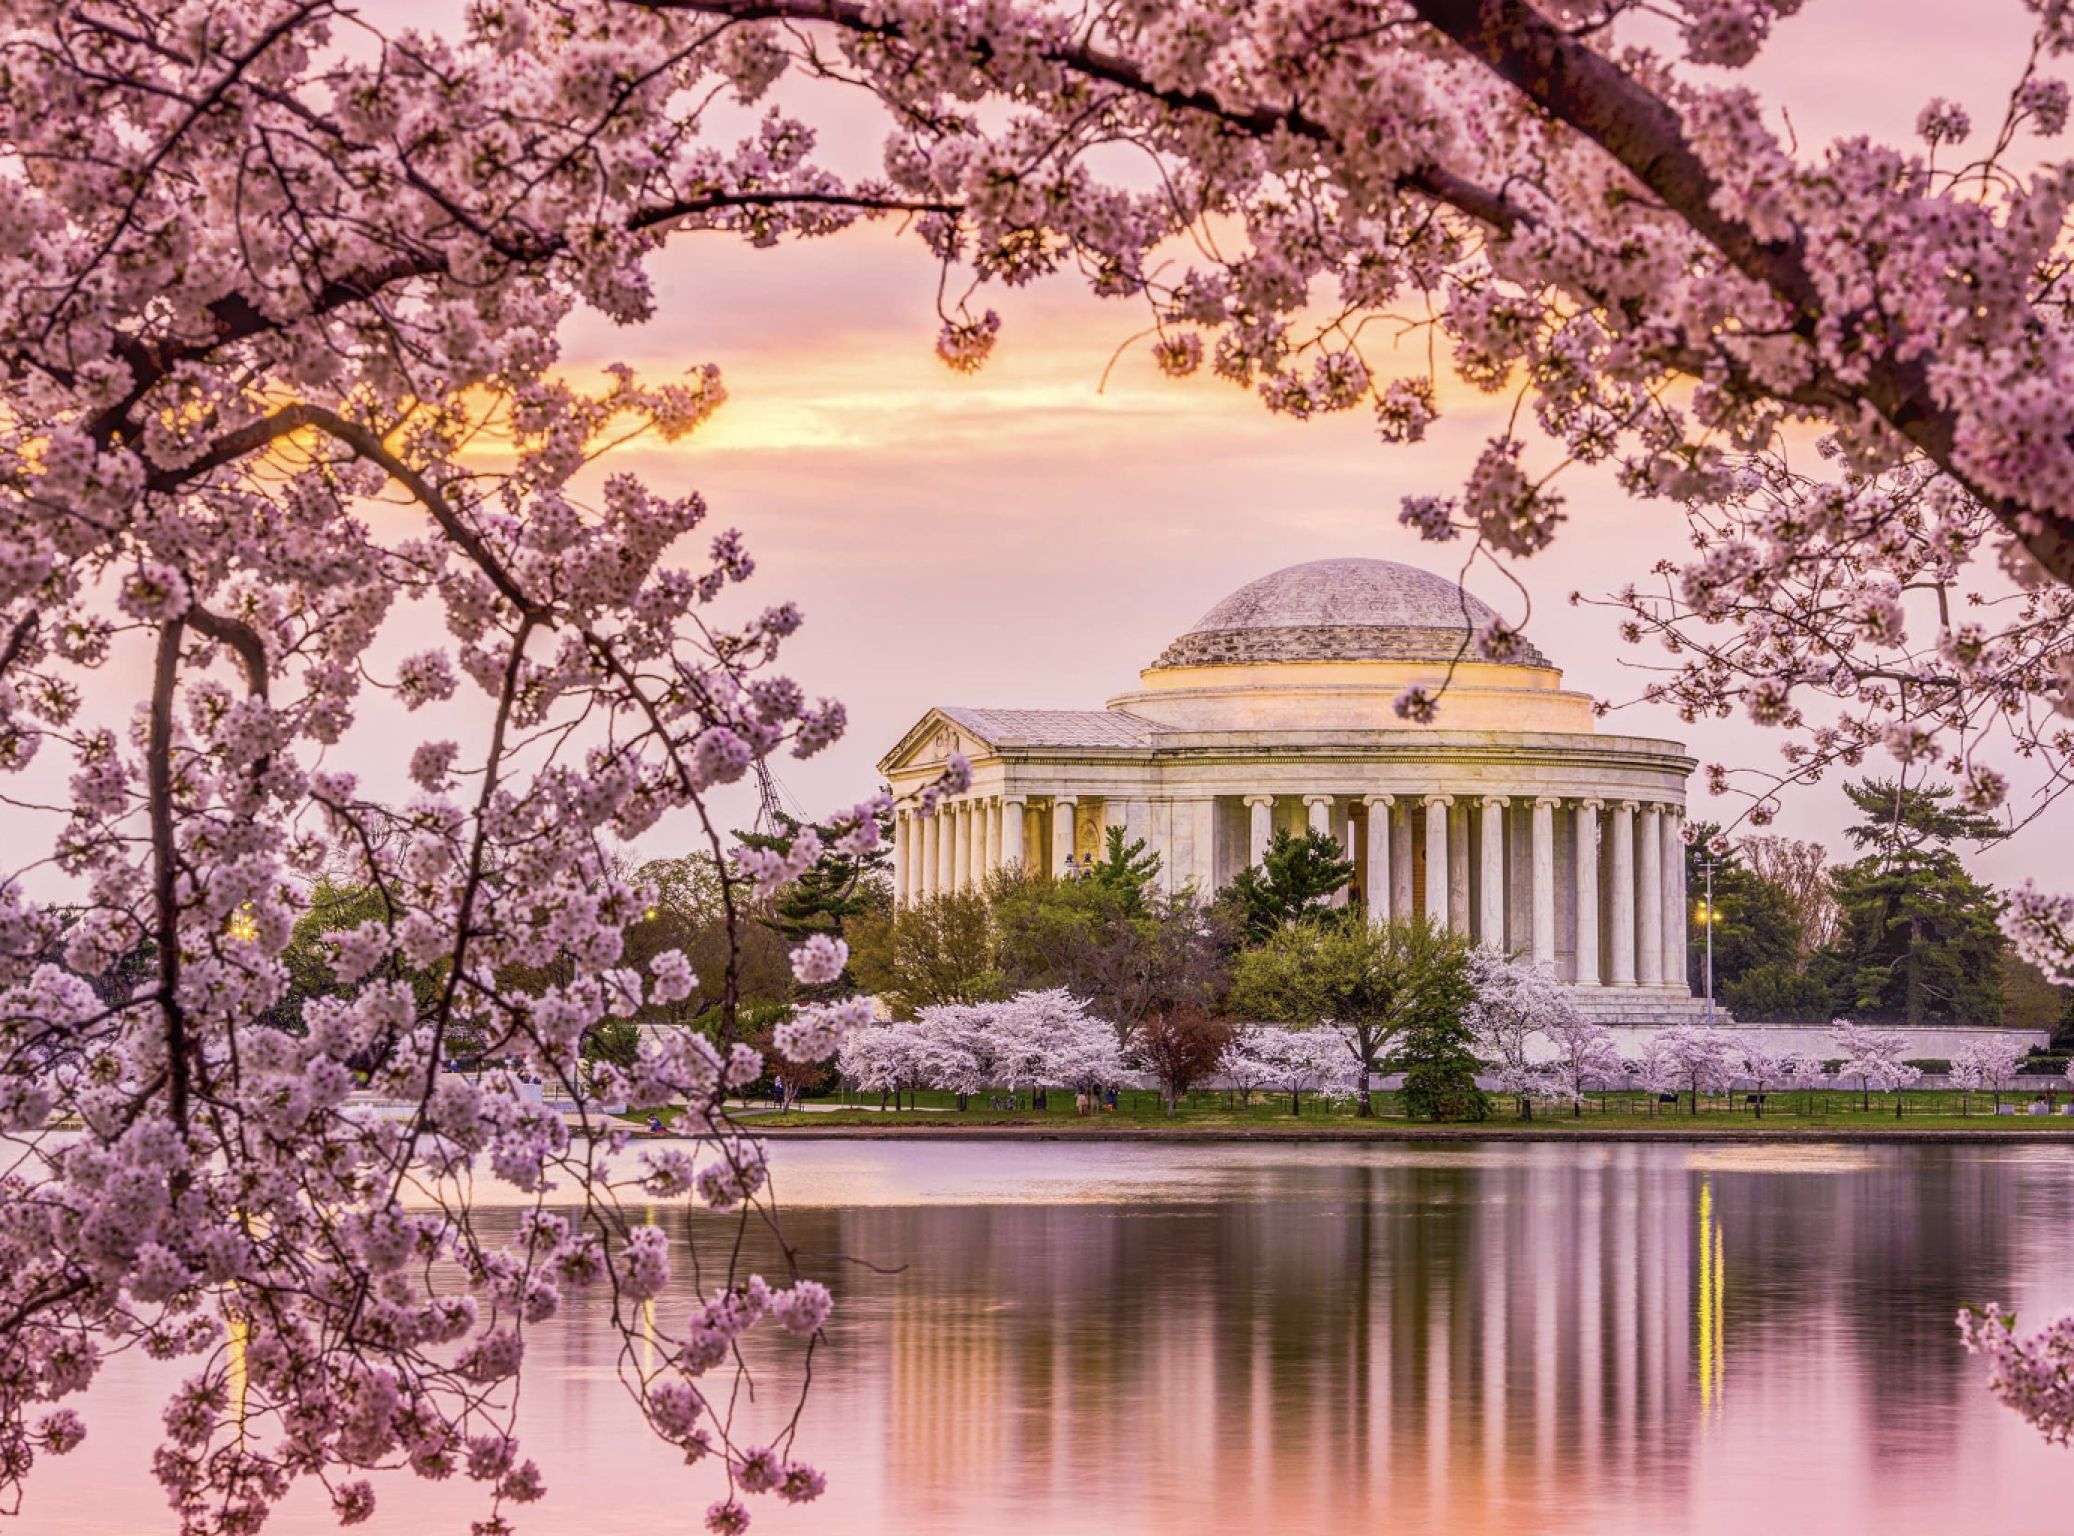 Washington D.C. Cherry Blossom Festival Guide & Map